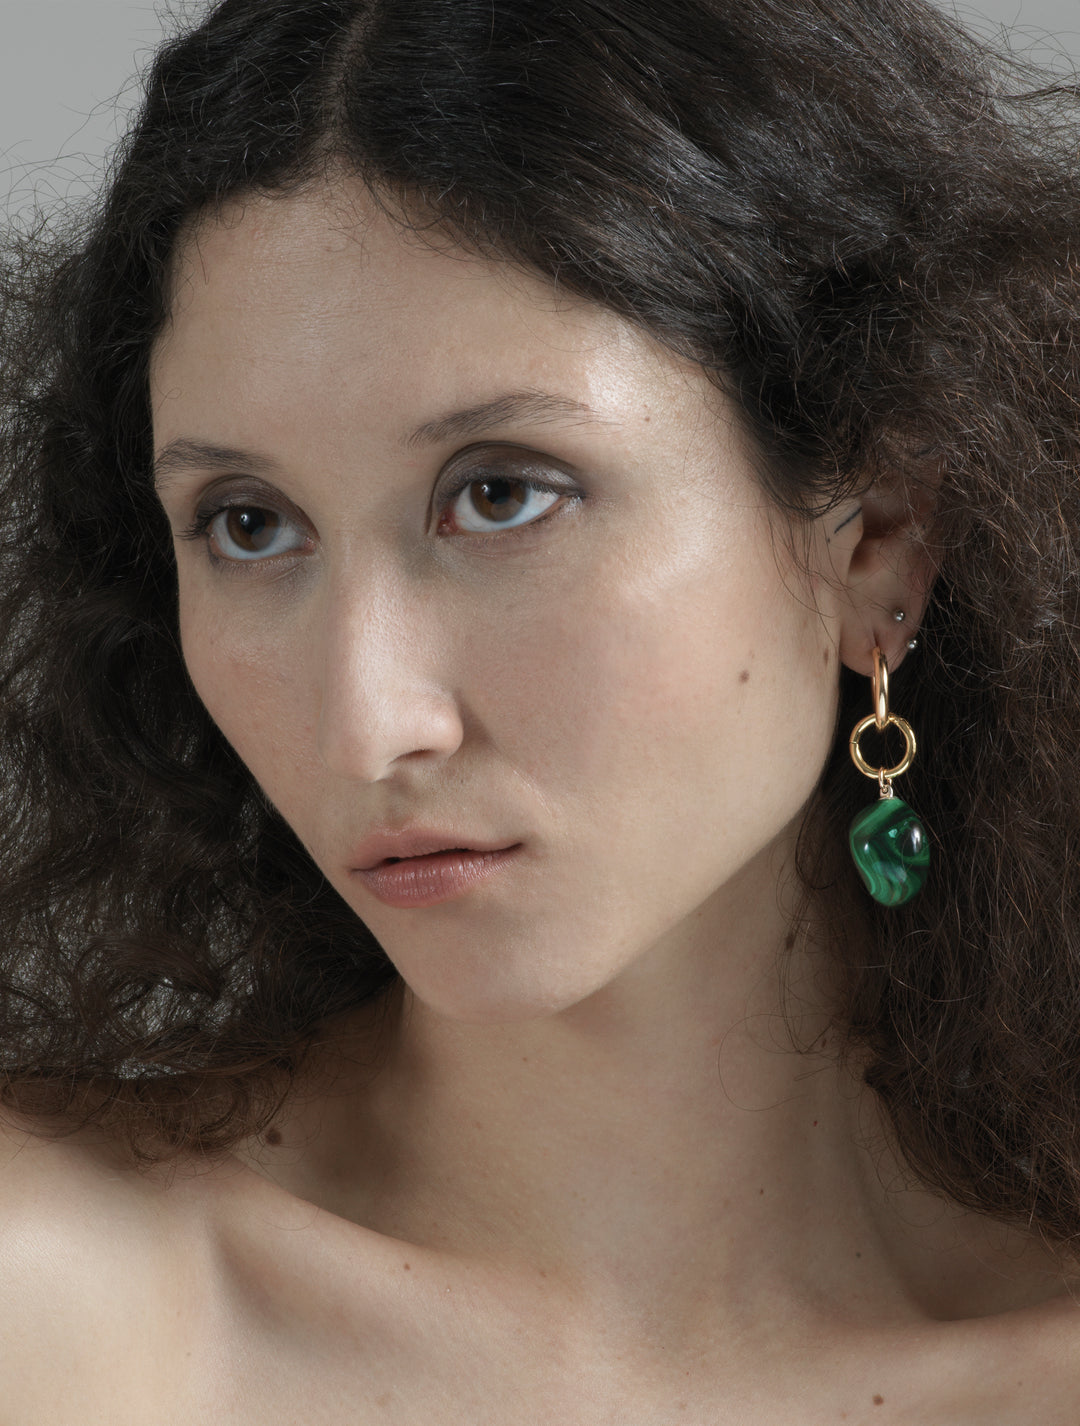 llayers chic gold Malachite jewelry hoops earrings jewelry Made in Brooklyn New York